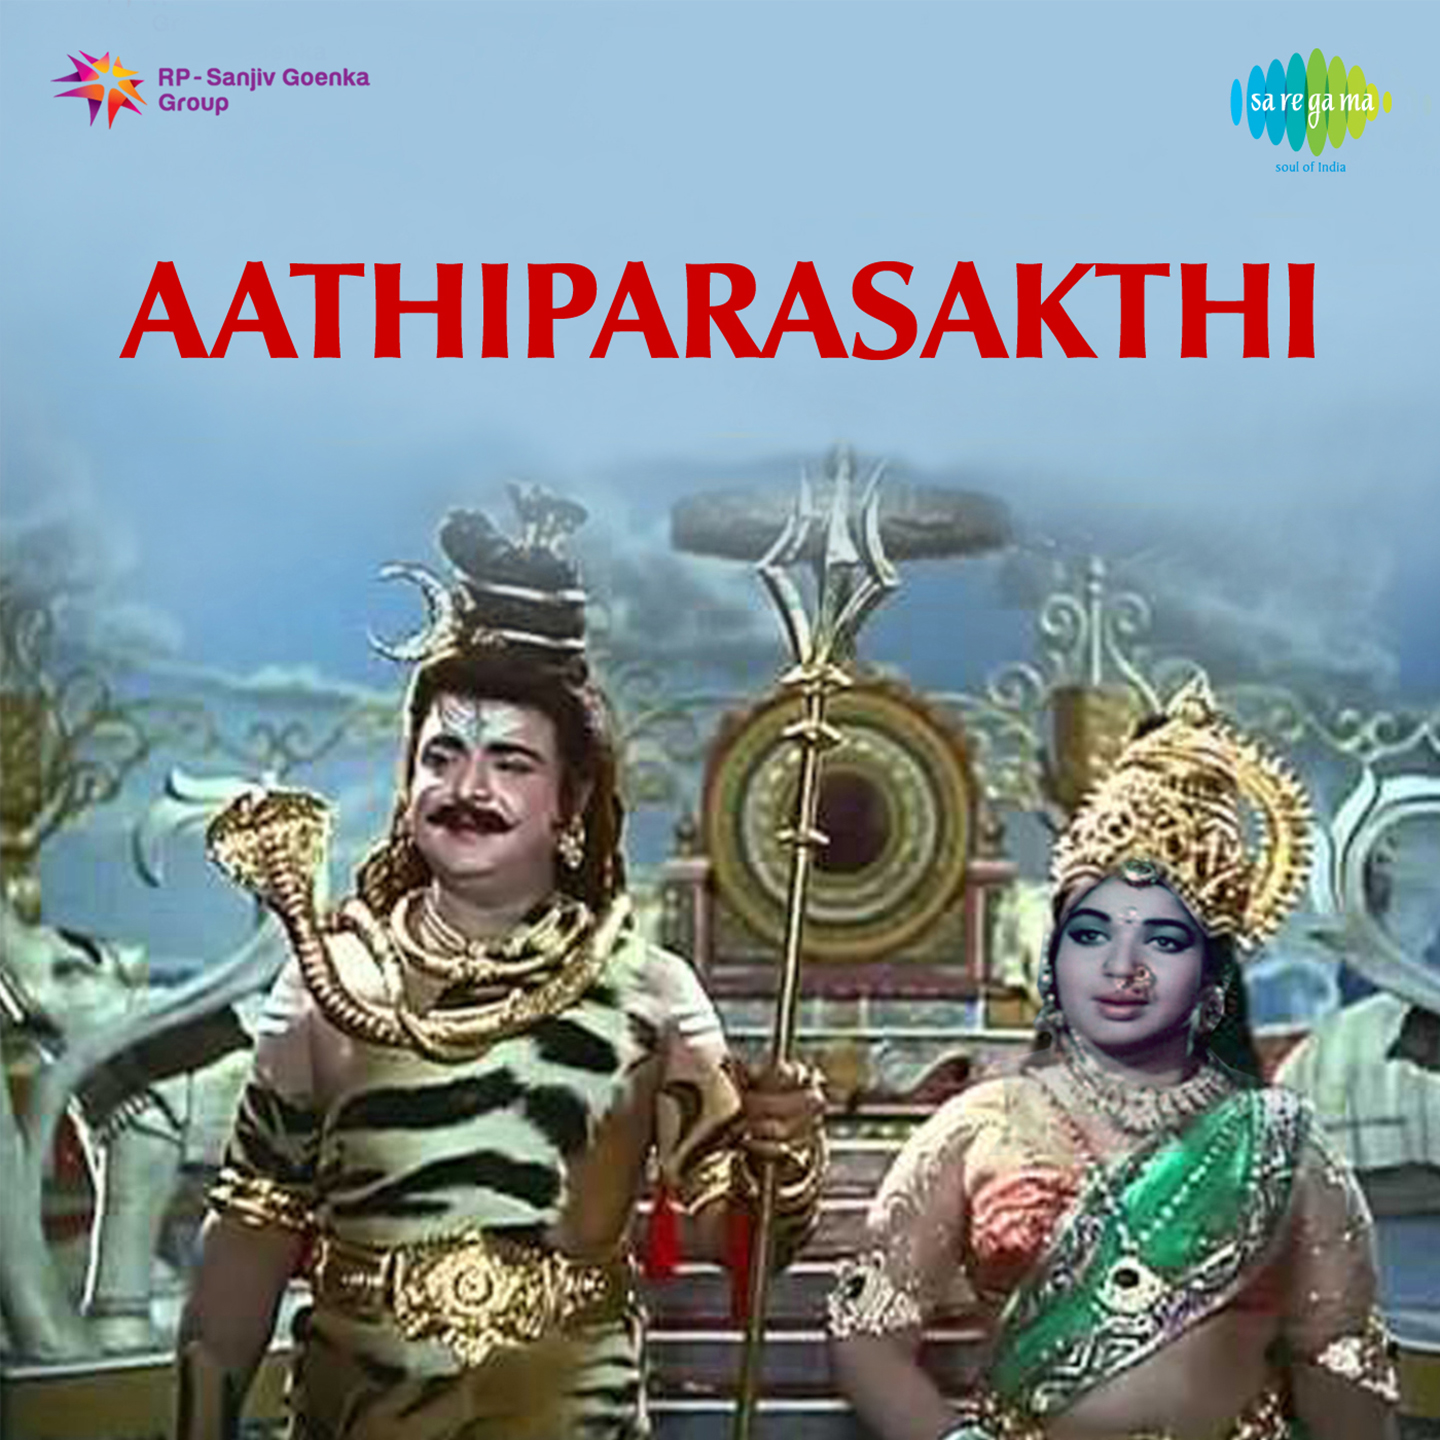 Aathiparasakthi Story & Dialogues - Part I